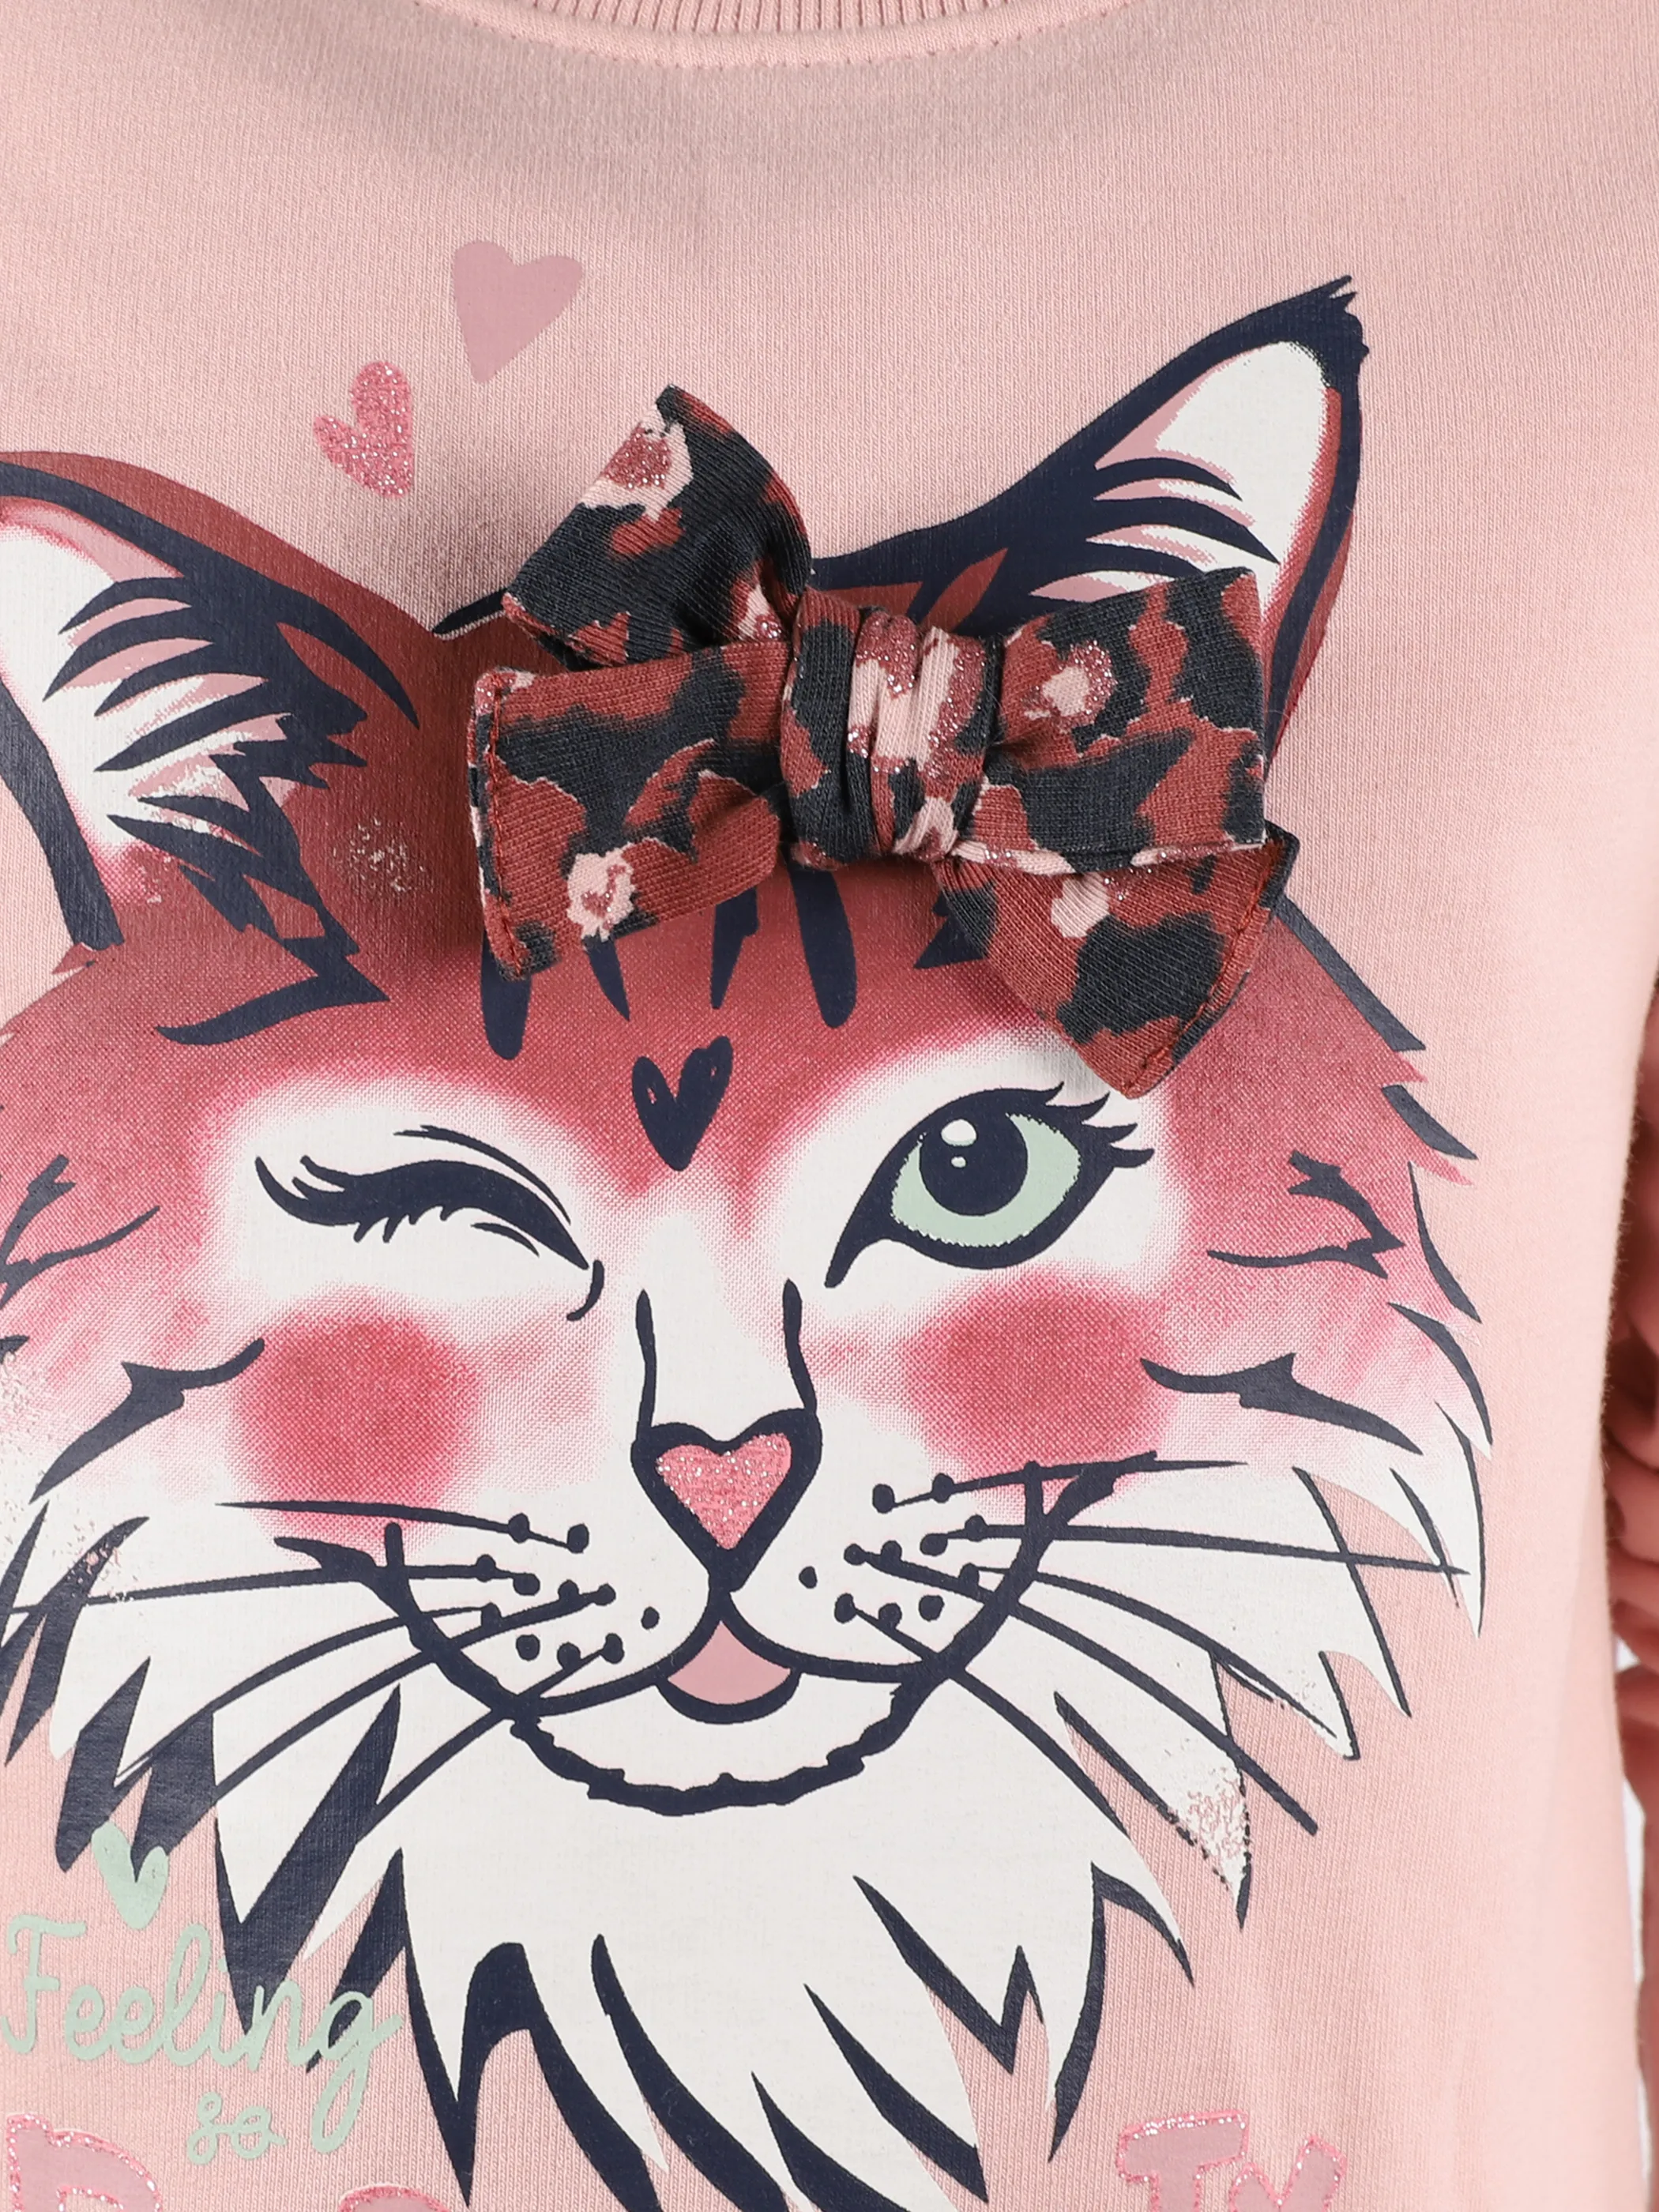 Stop + Go KM Sweat Kleid in rose mit Katze Applikation Rosa 881749 ROSE 3